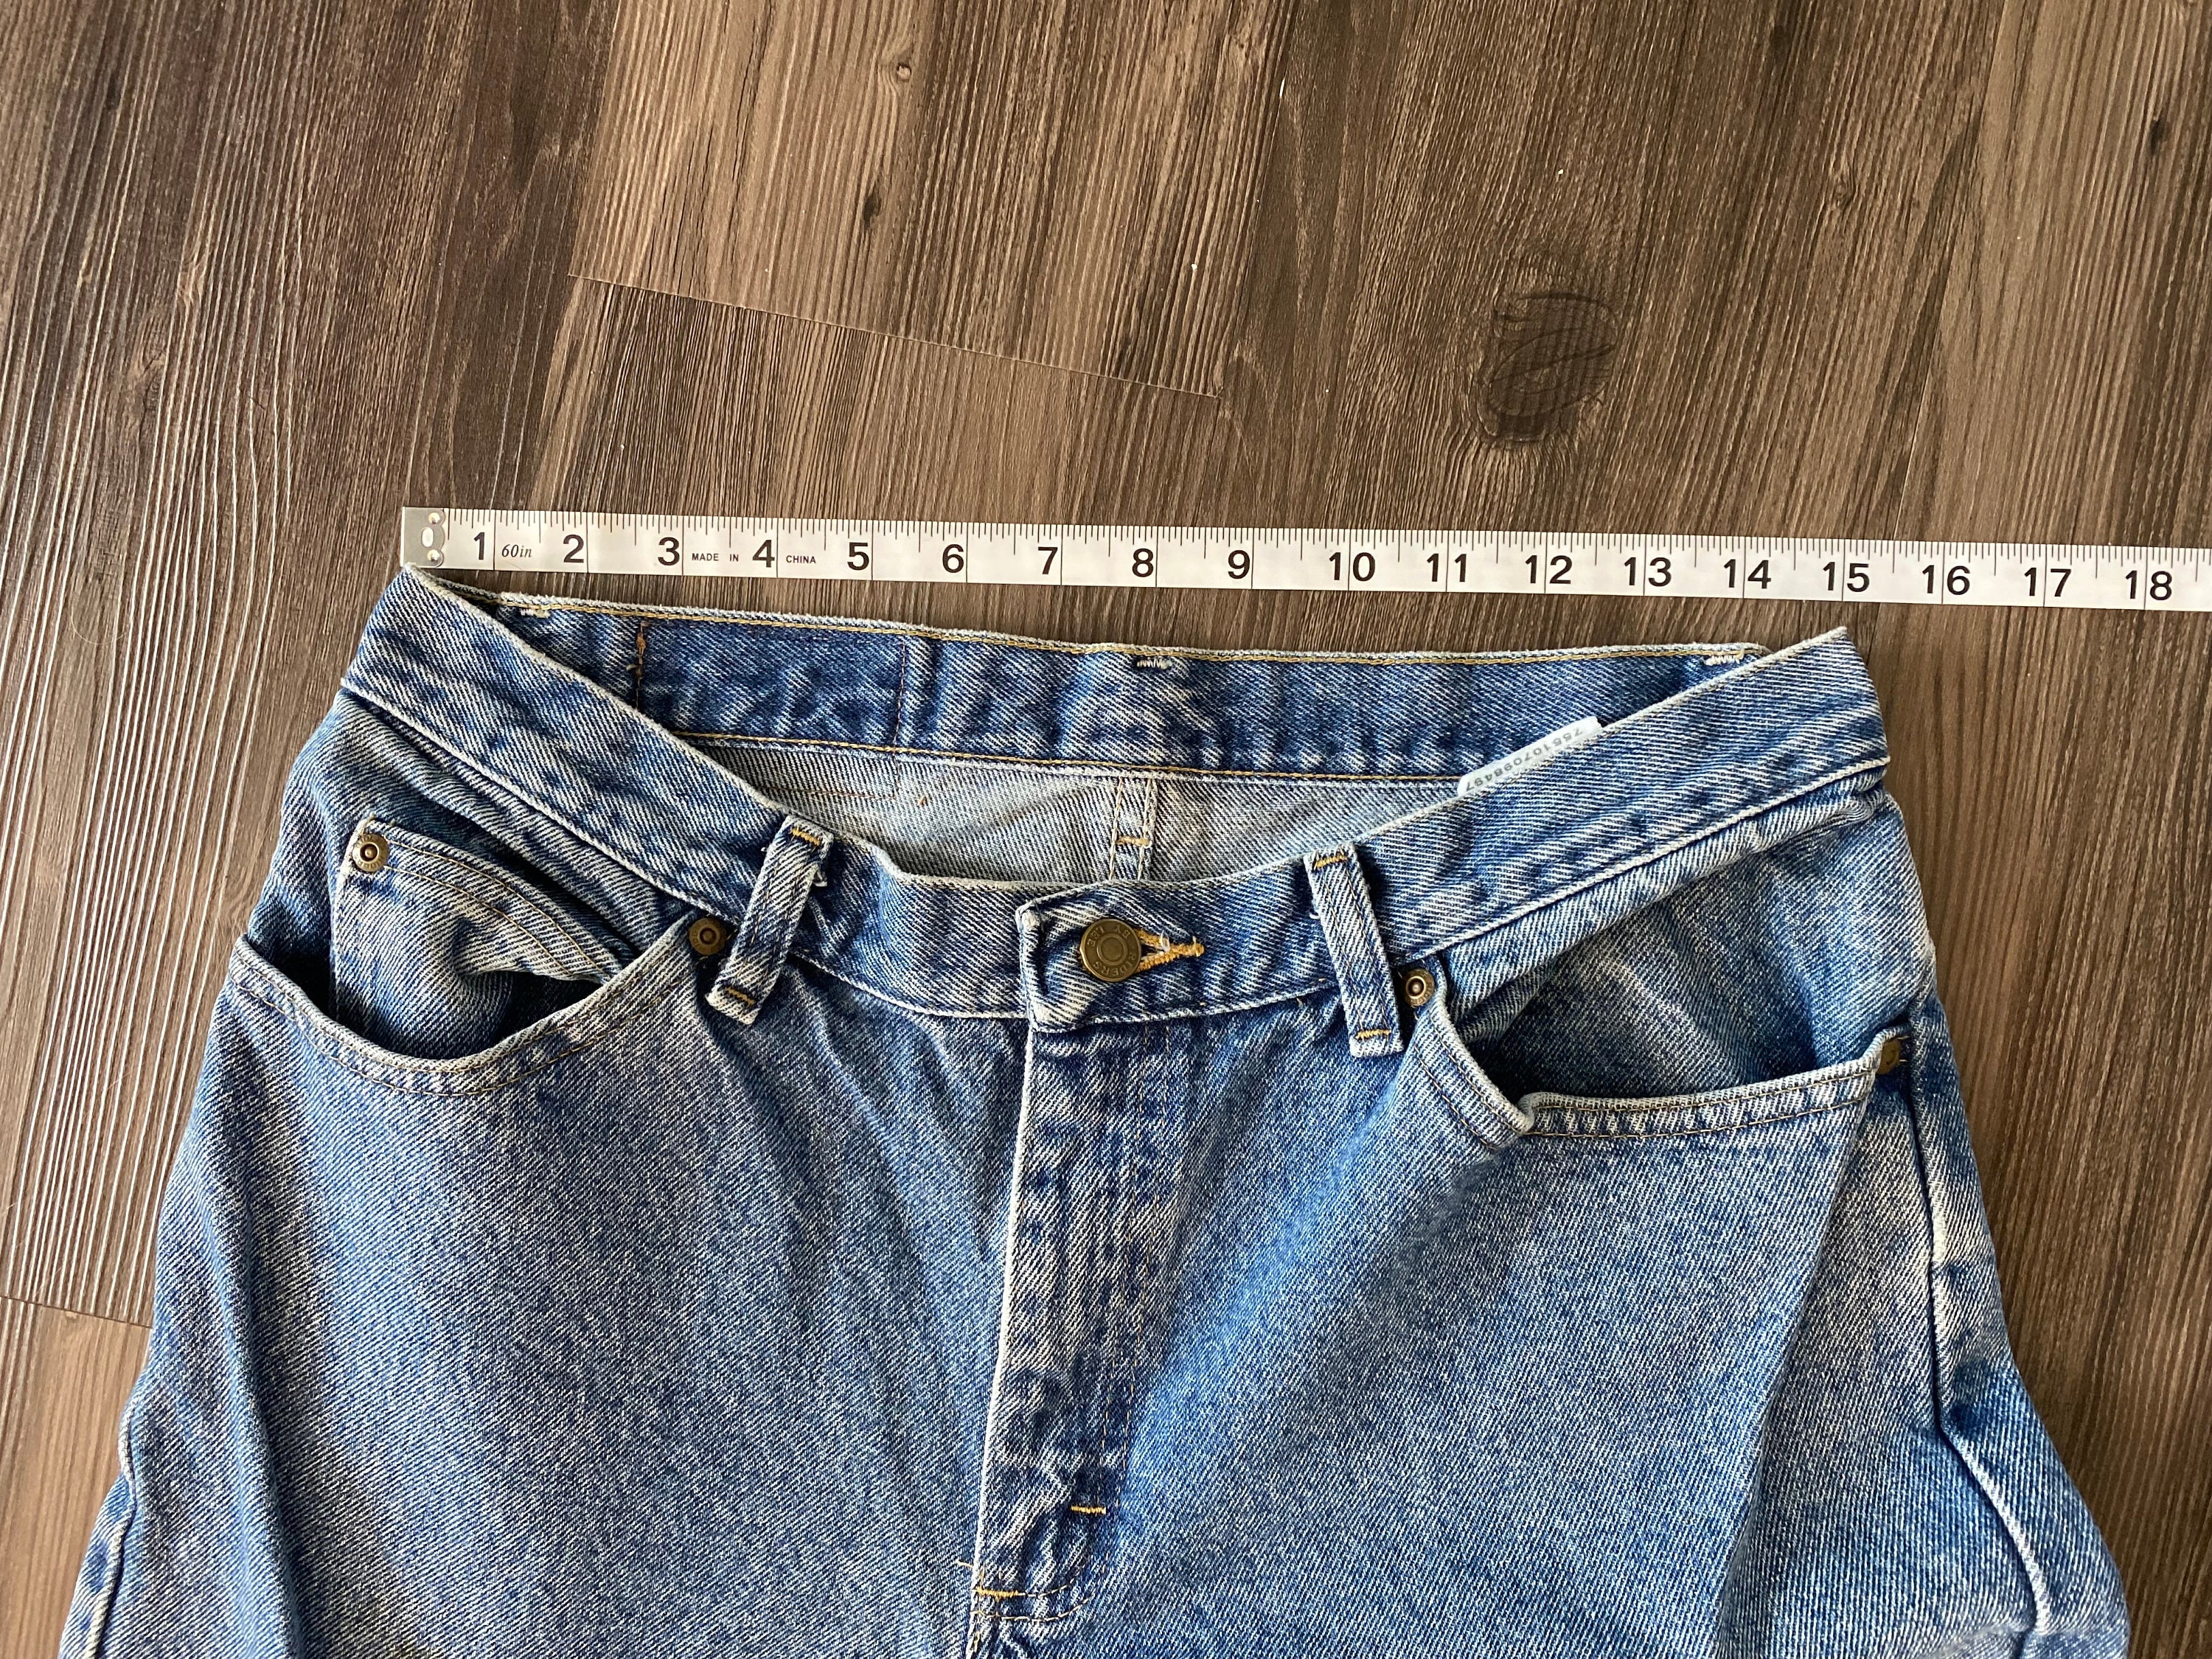 Lee 2000s jeans for women - Mudvintage – Fangovintage